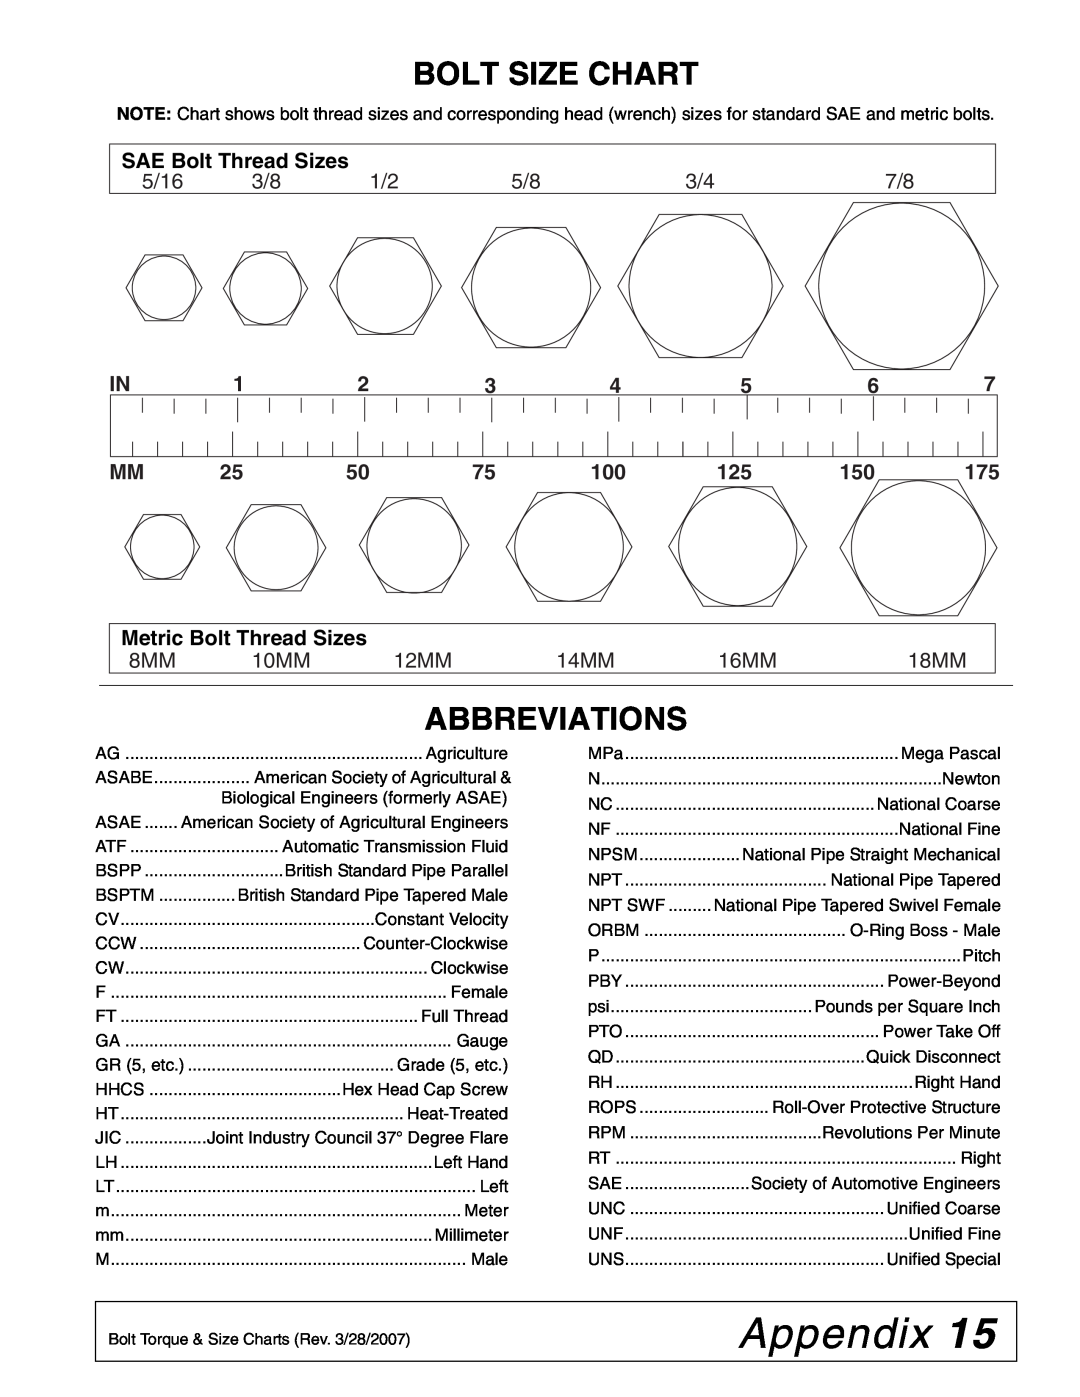 Woods Equipment ST500 manual Appendix, Bolt Size Chart, Abbreviations, SAE Bolt Thread Sizes, Metric Bolt Thread Sizes 